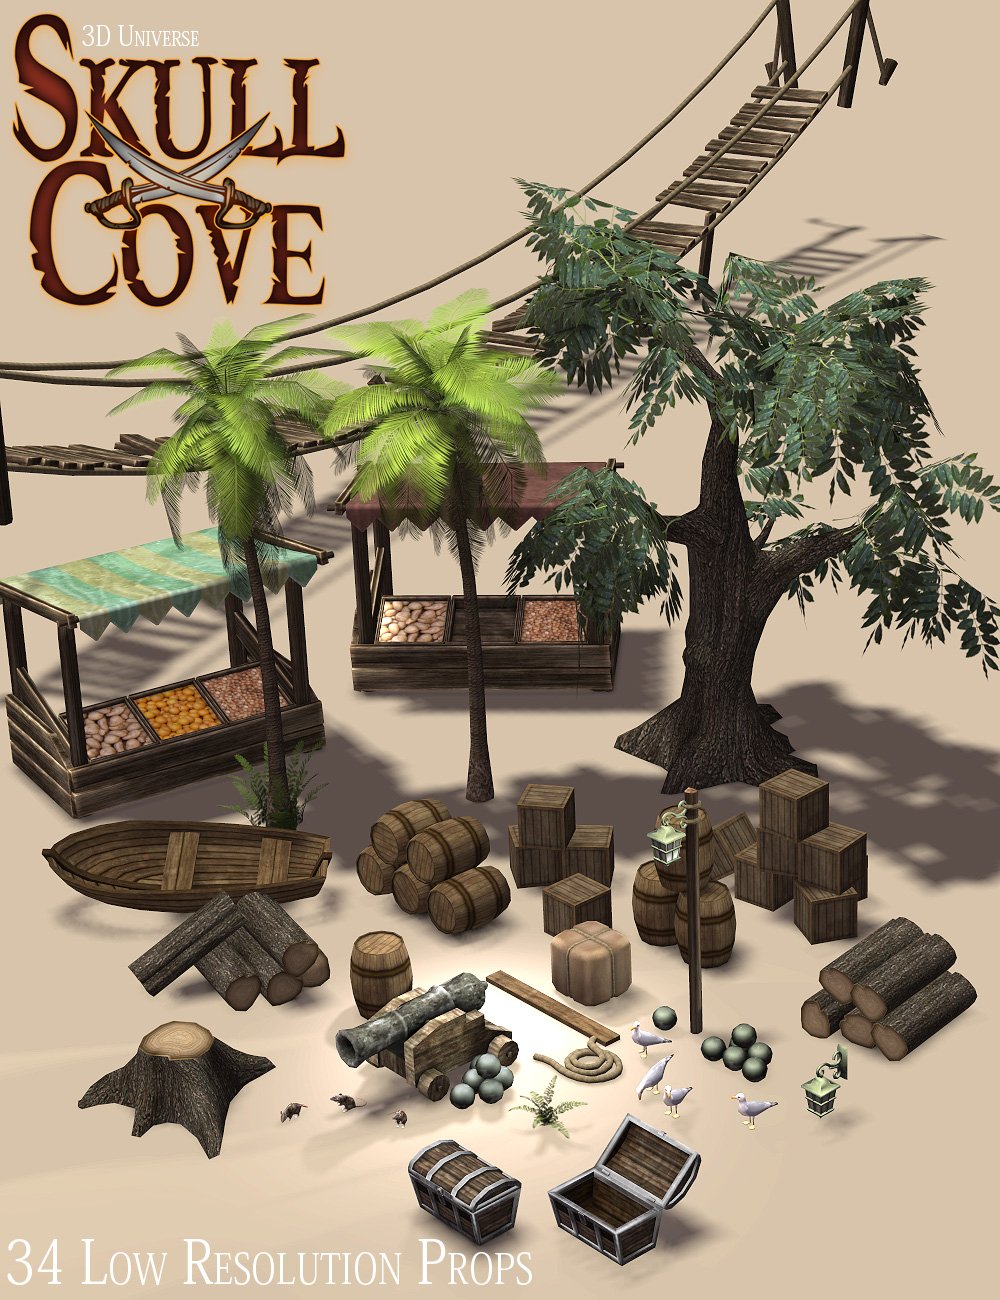 Skull Cove Props by: 3D Universe, 3D Models by Daz 3D